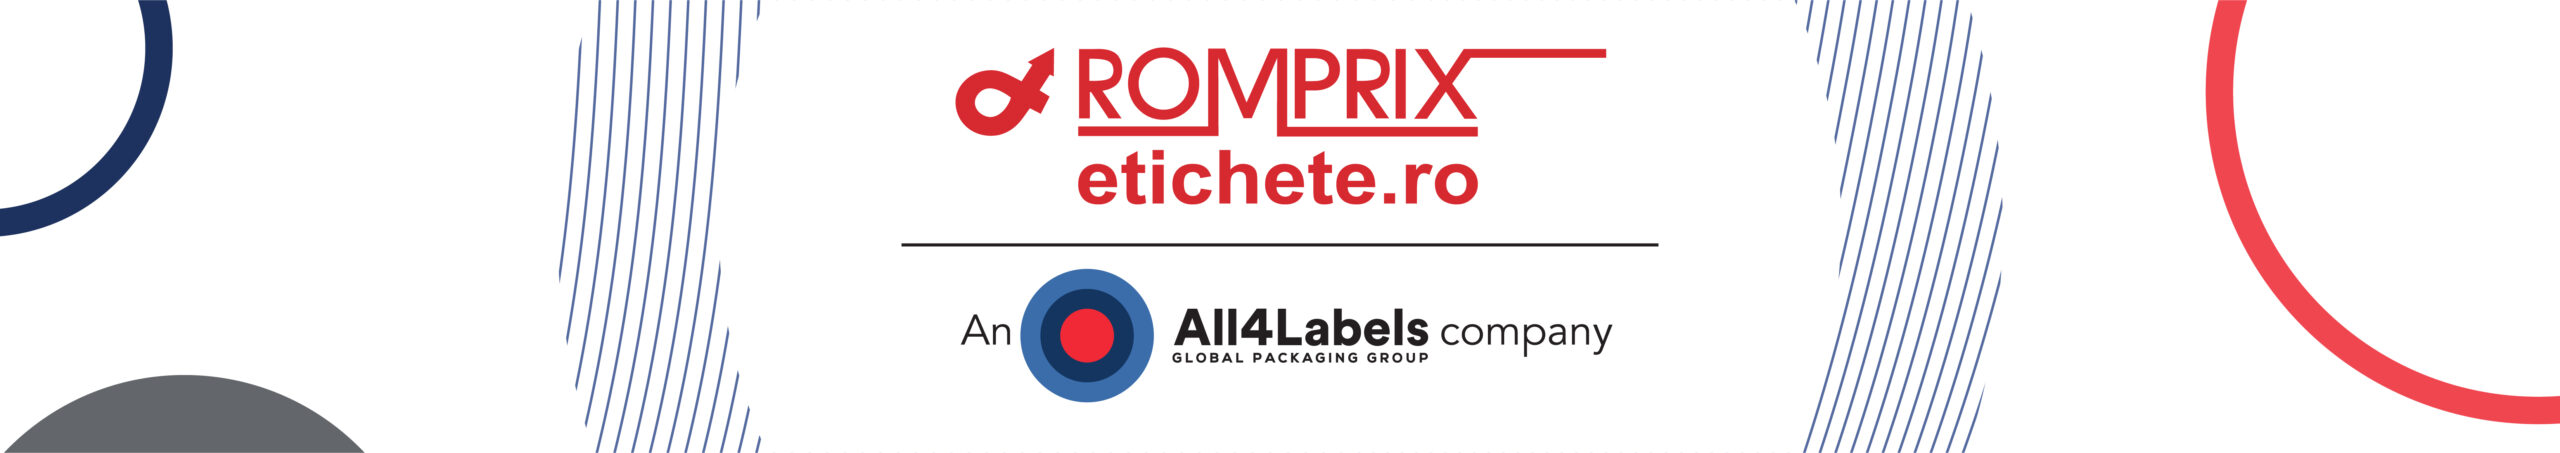 Romprix - etichete.ro - parte din All4Labels